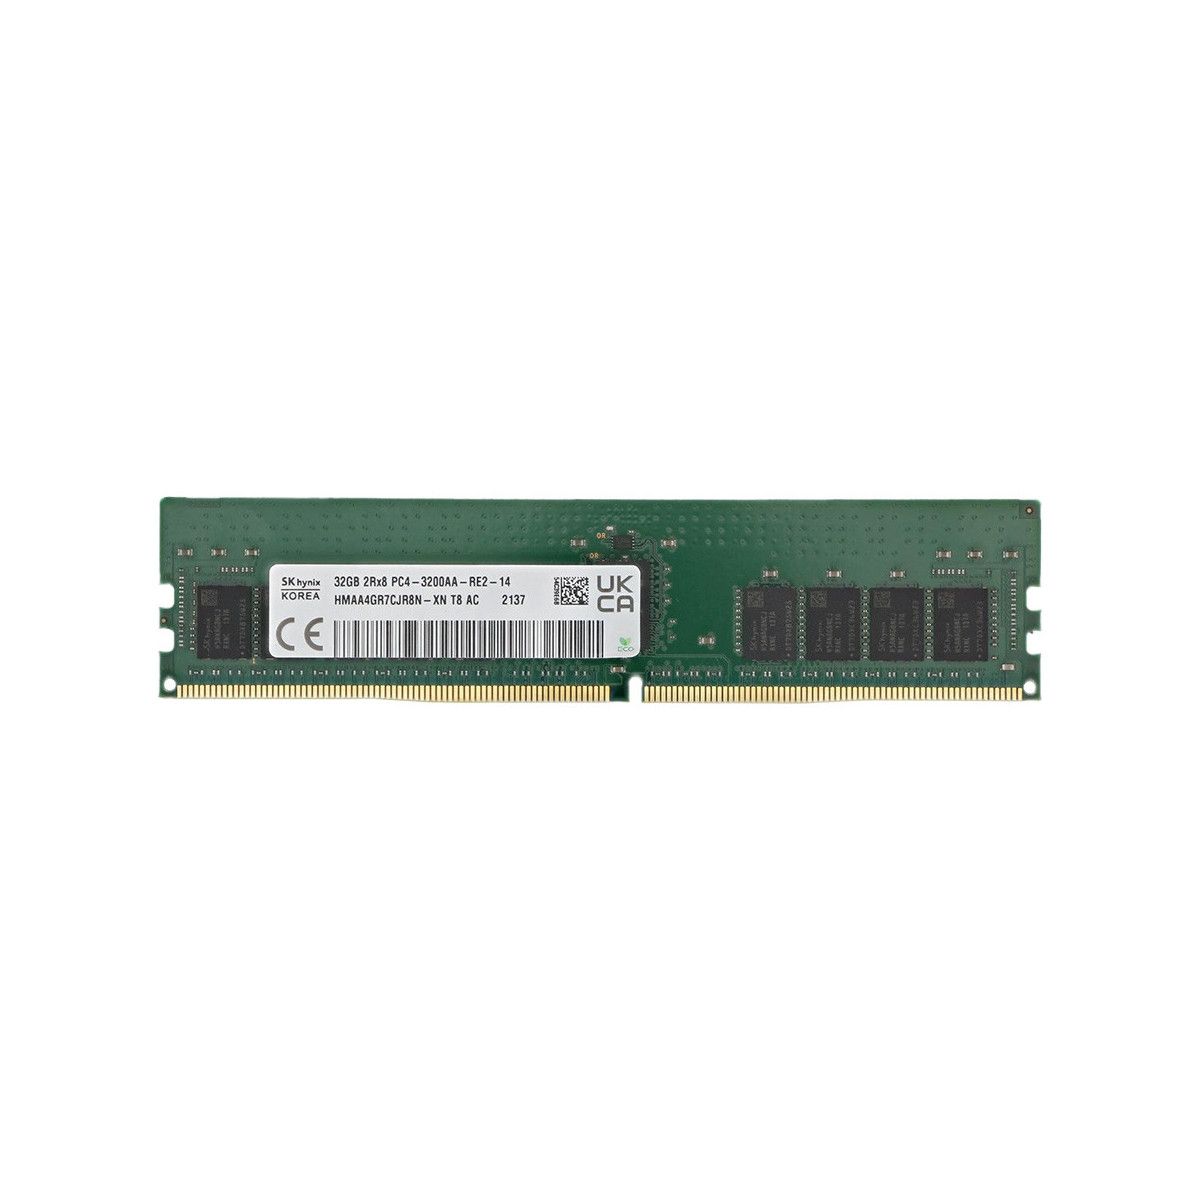 P43022-B21-MS - Memstar 1x 32GB DDR4-3200 UDIMM PC4-25600U - Memorie OEM compatibilă cu Mem-star 1 - Memstar 